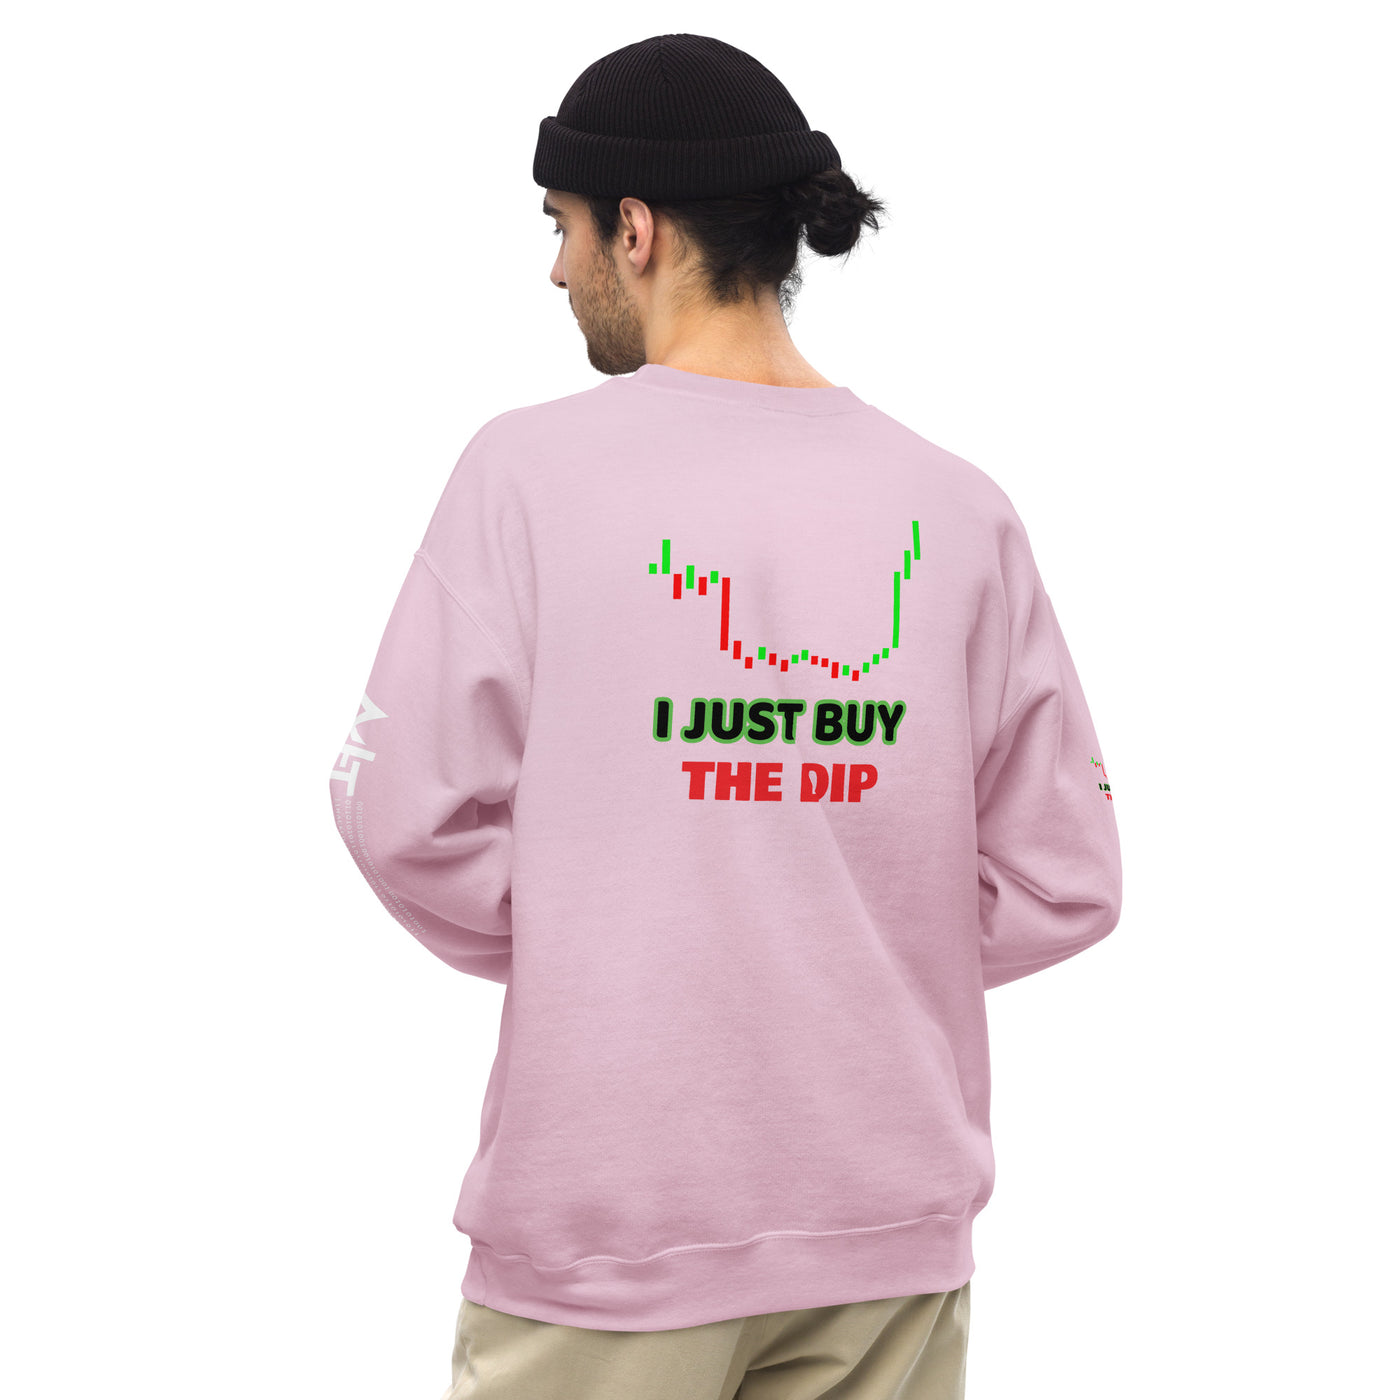 I just buy the deep - Unisex Sweatshirt (back print)